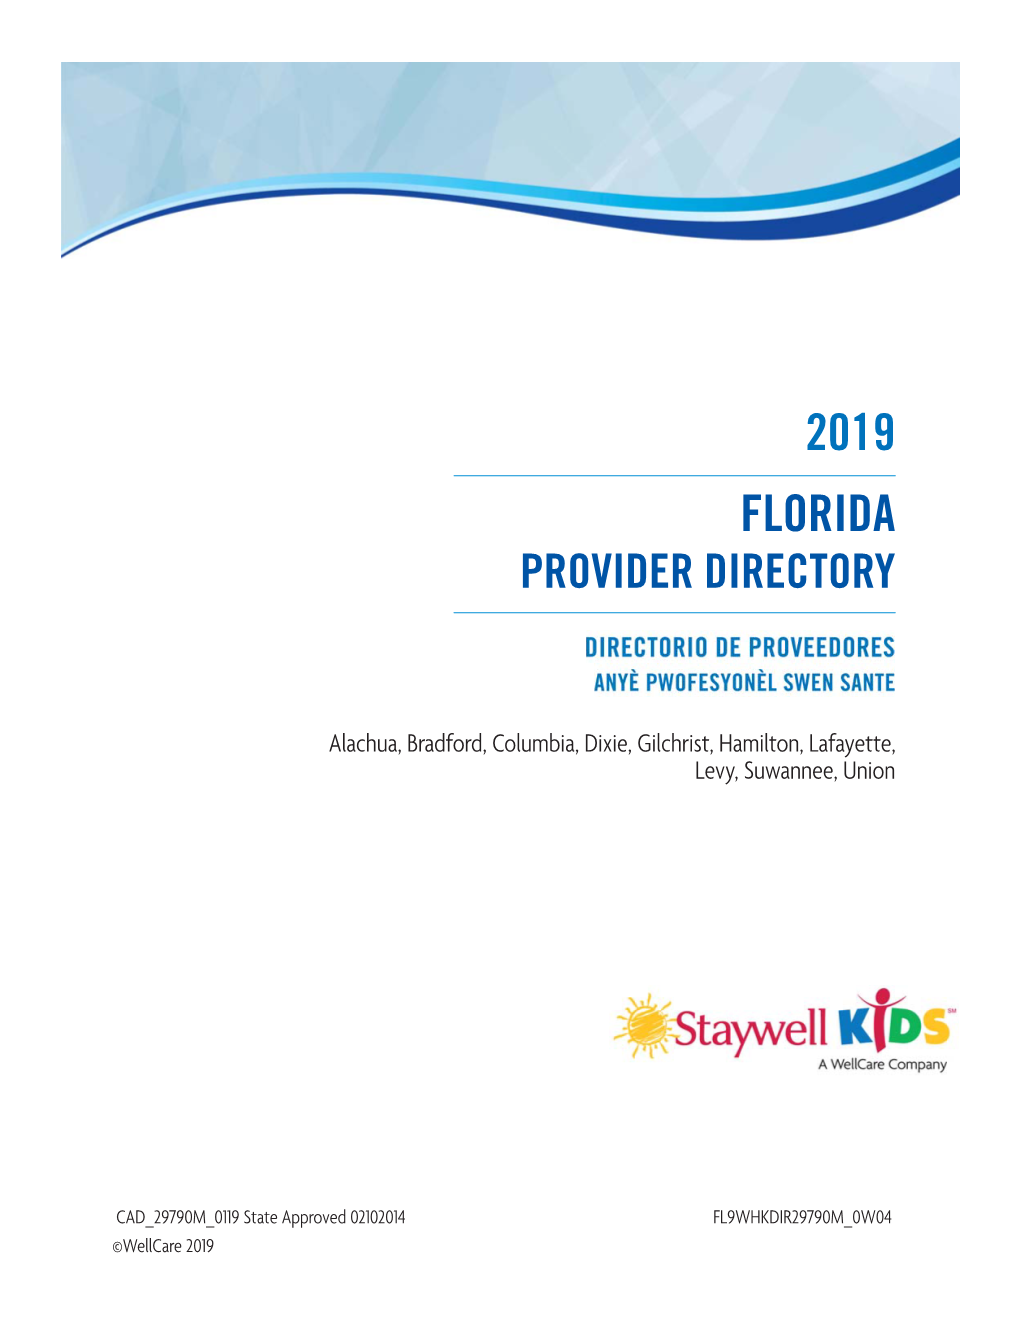 2019 Florida Provider Directory